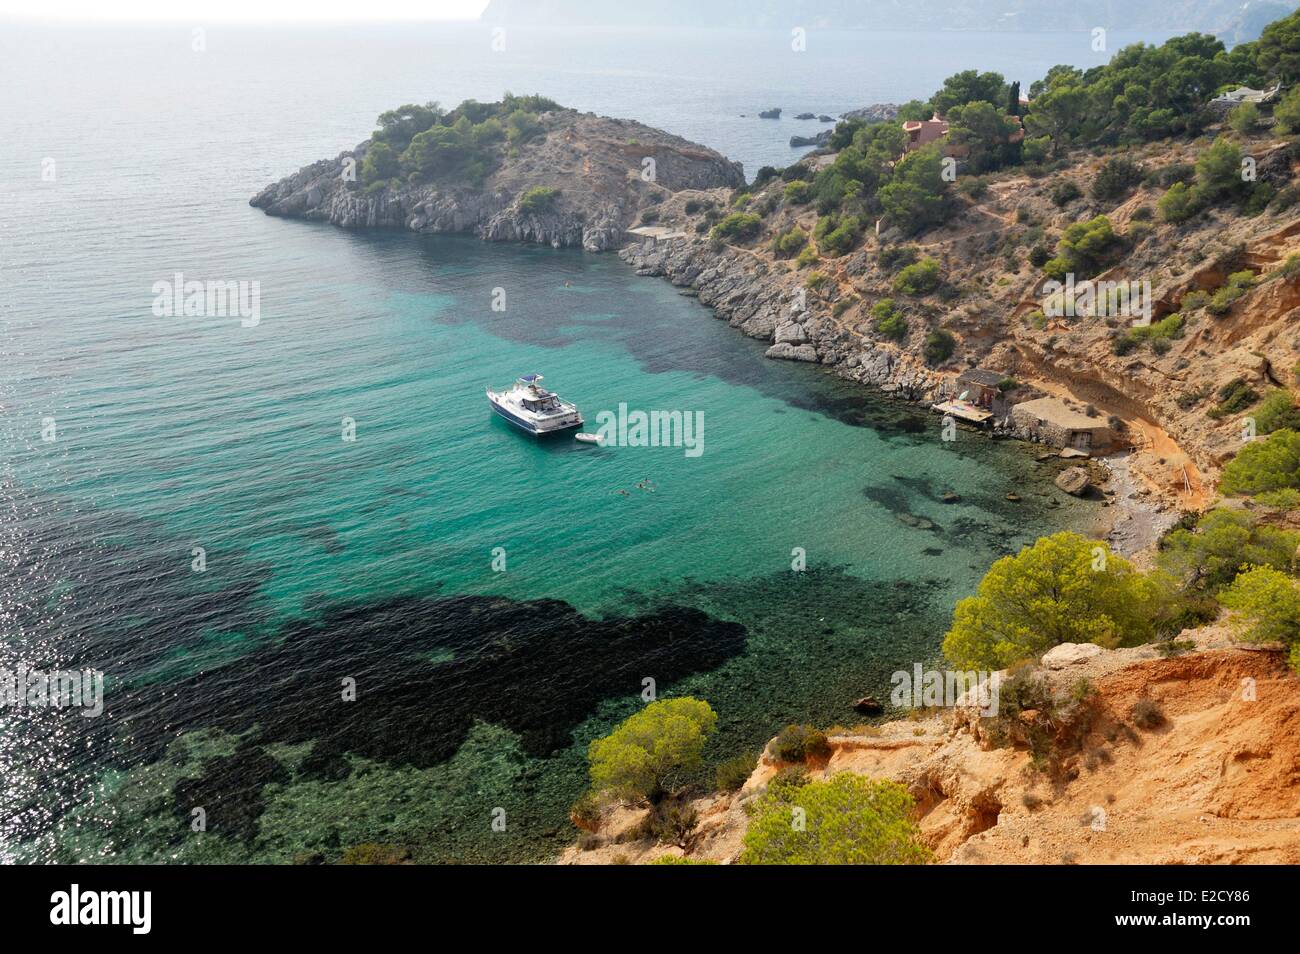 Spain Balearic islands Ibiza bay Vista Alegre boat moored in the bay Stock Photo